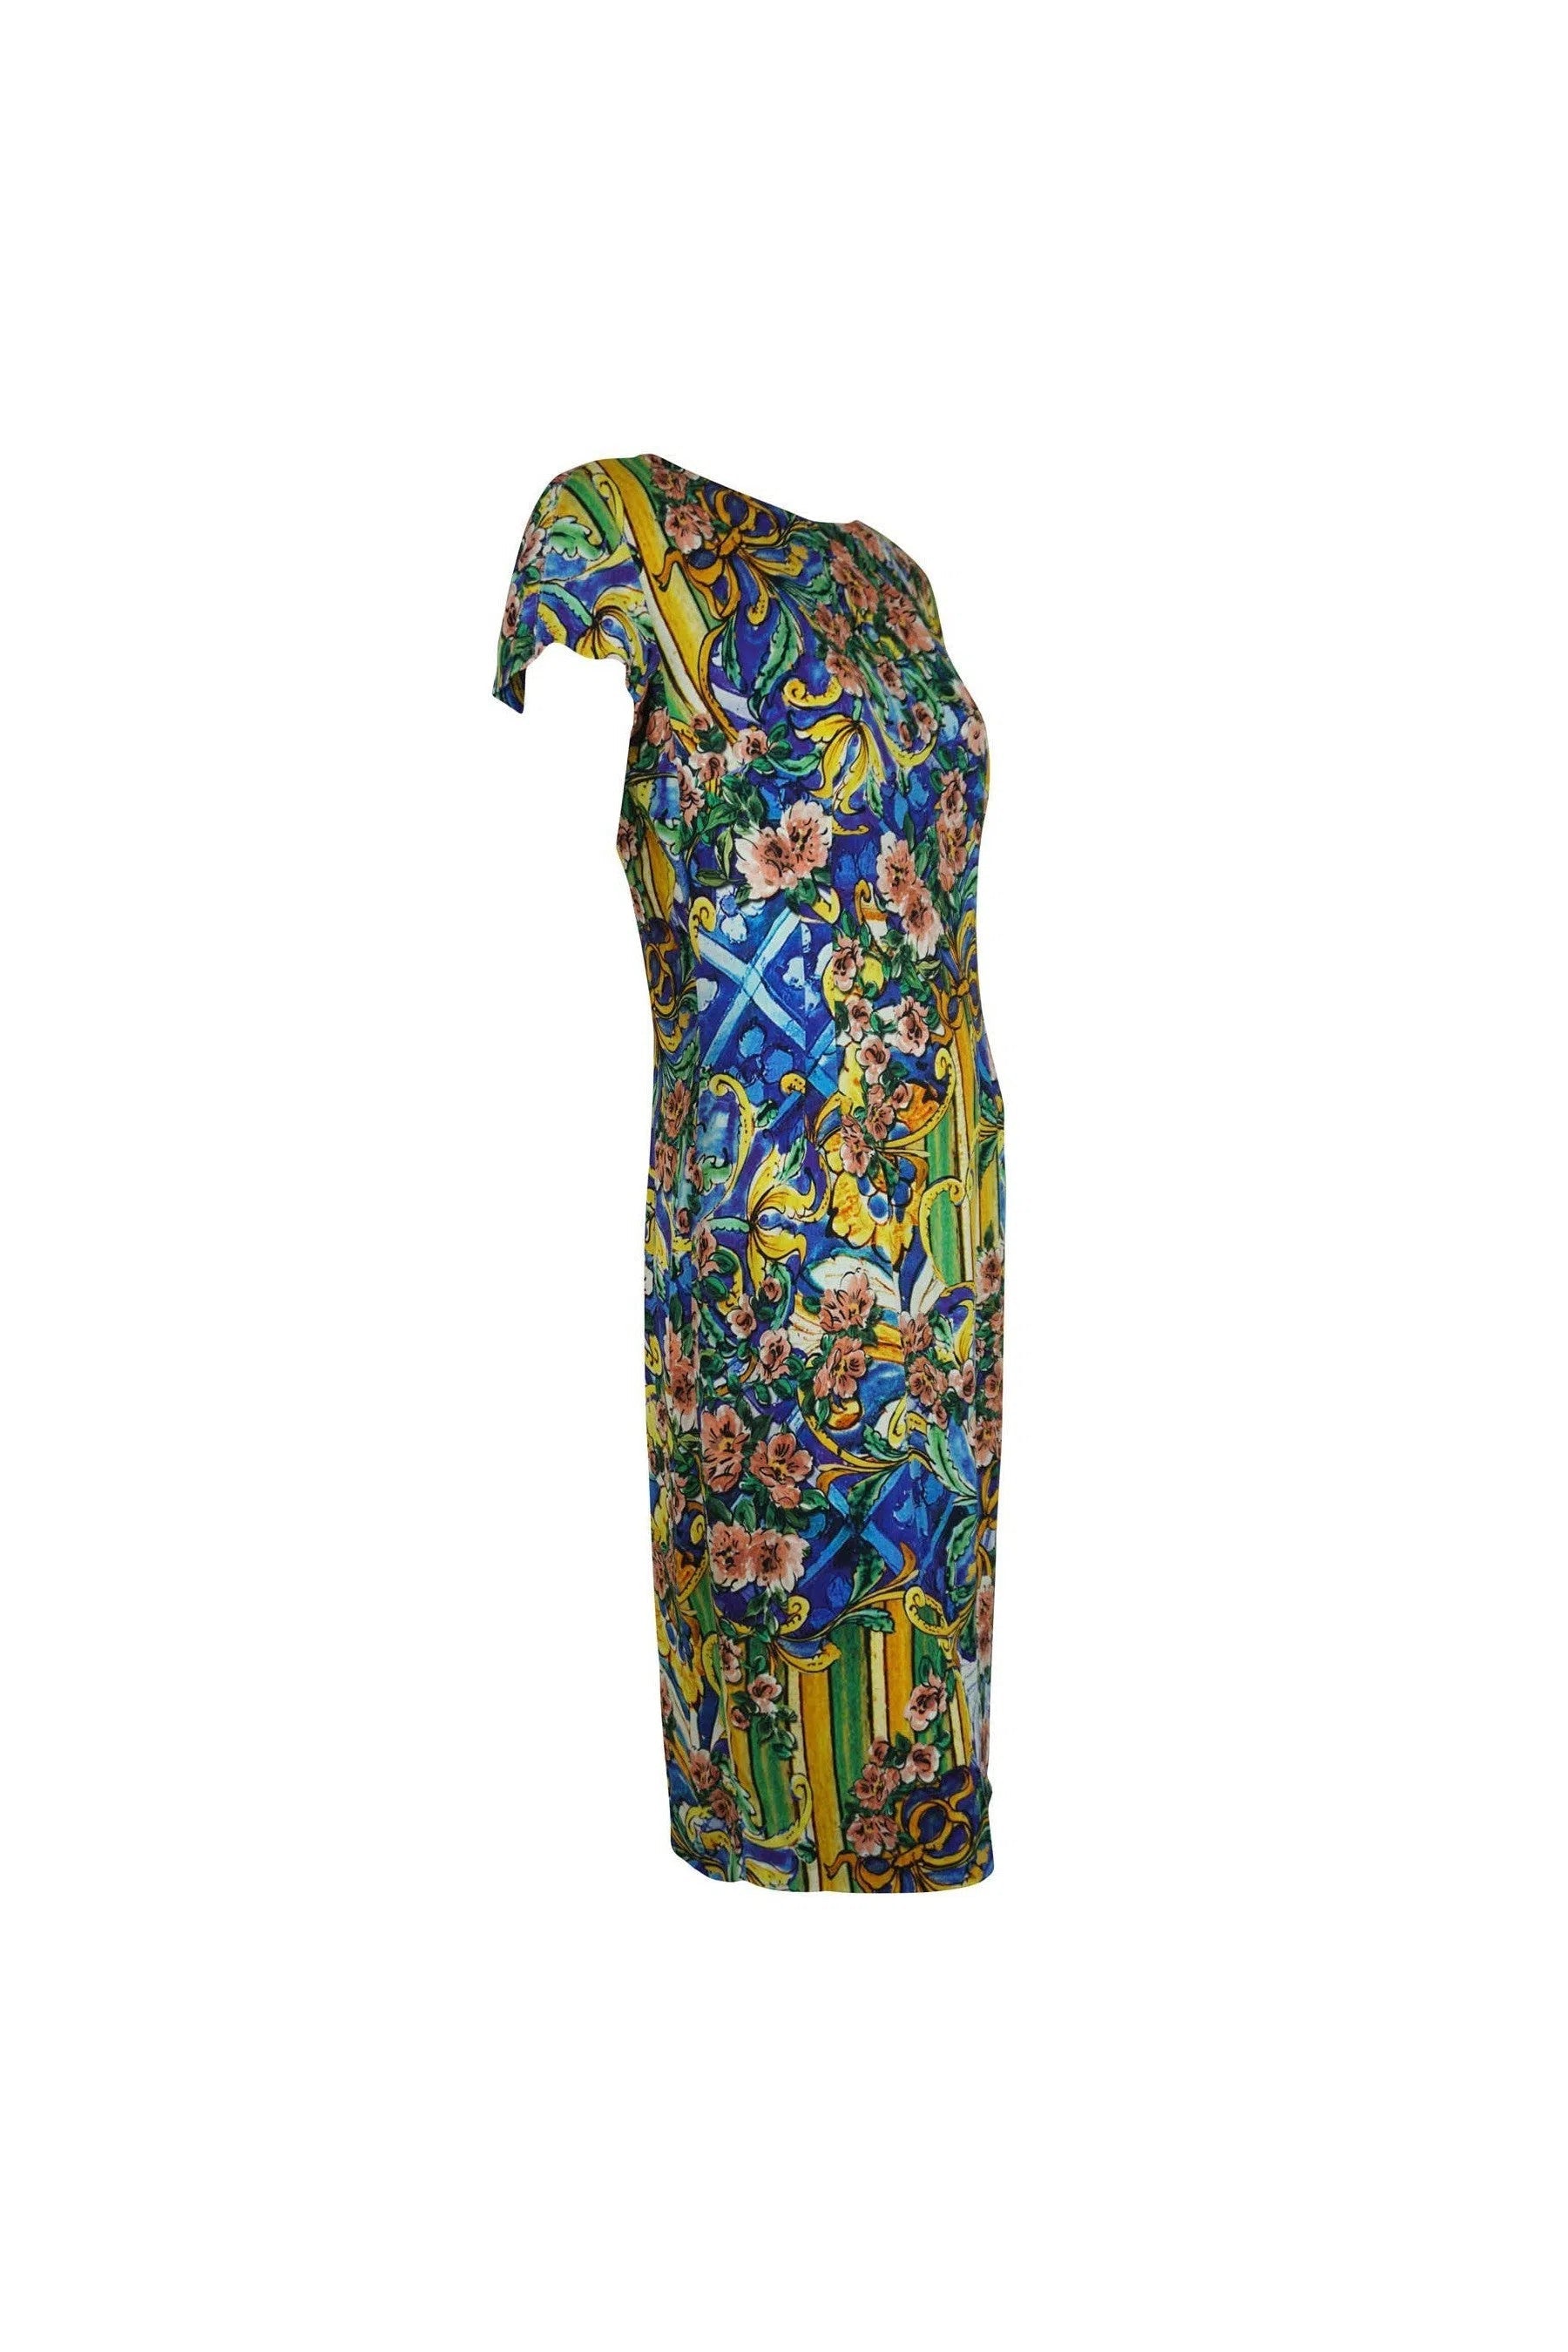 Dolce & Gabbana Blue and Yellow Sicilian Crepe Dress Sz 44/8 - Foxy Couture Carmel